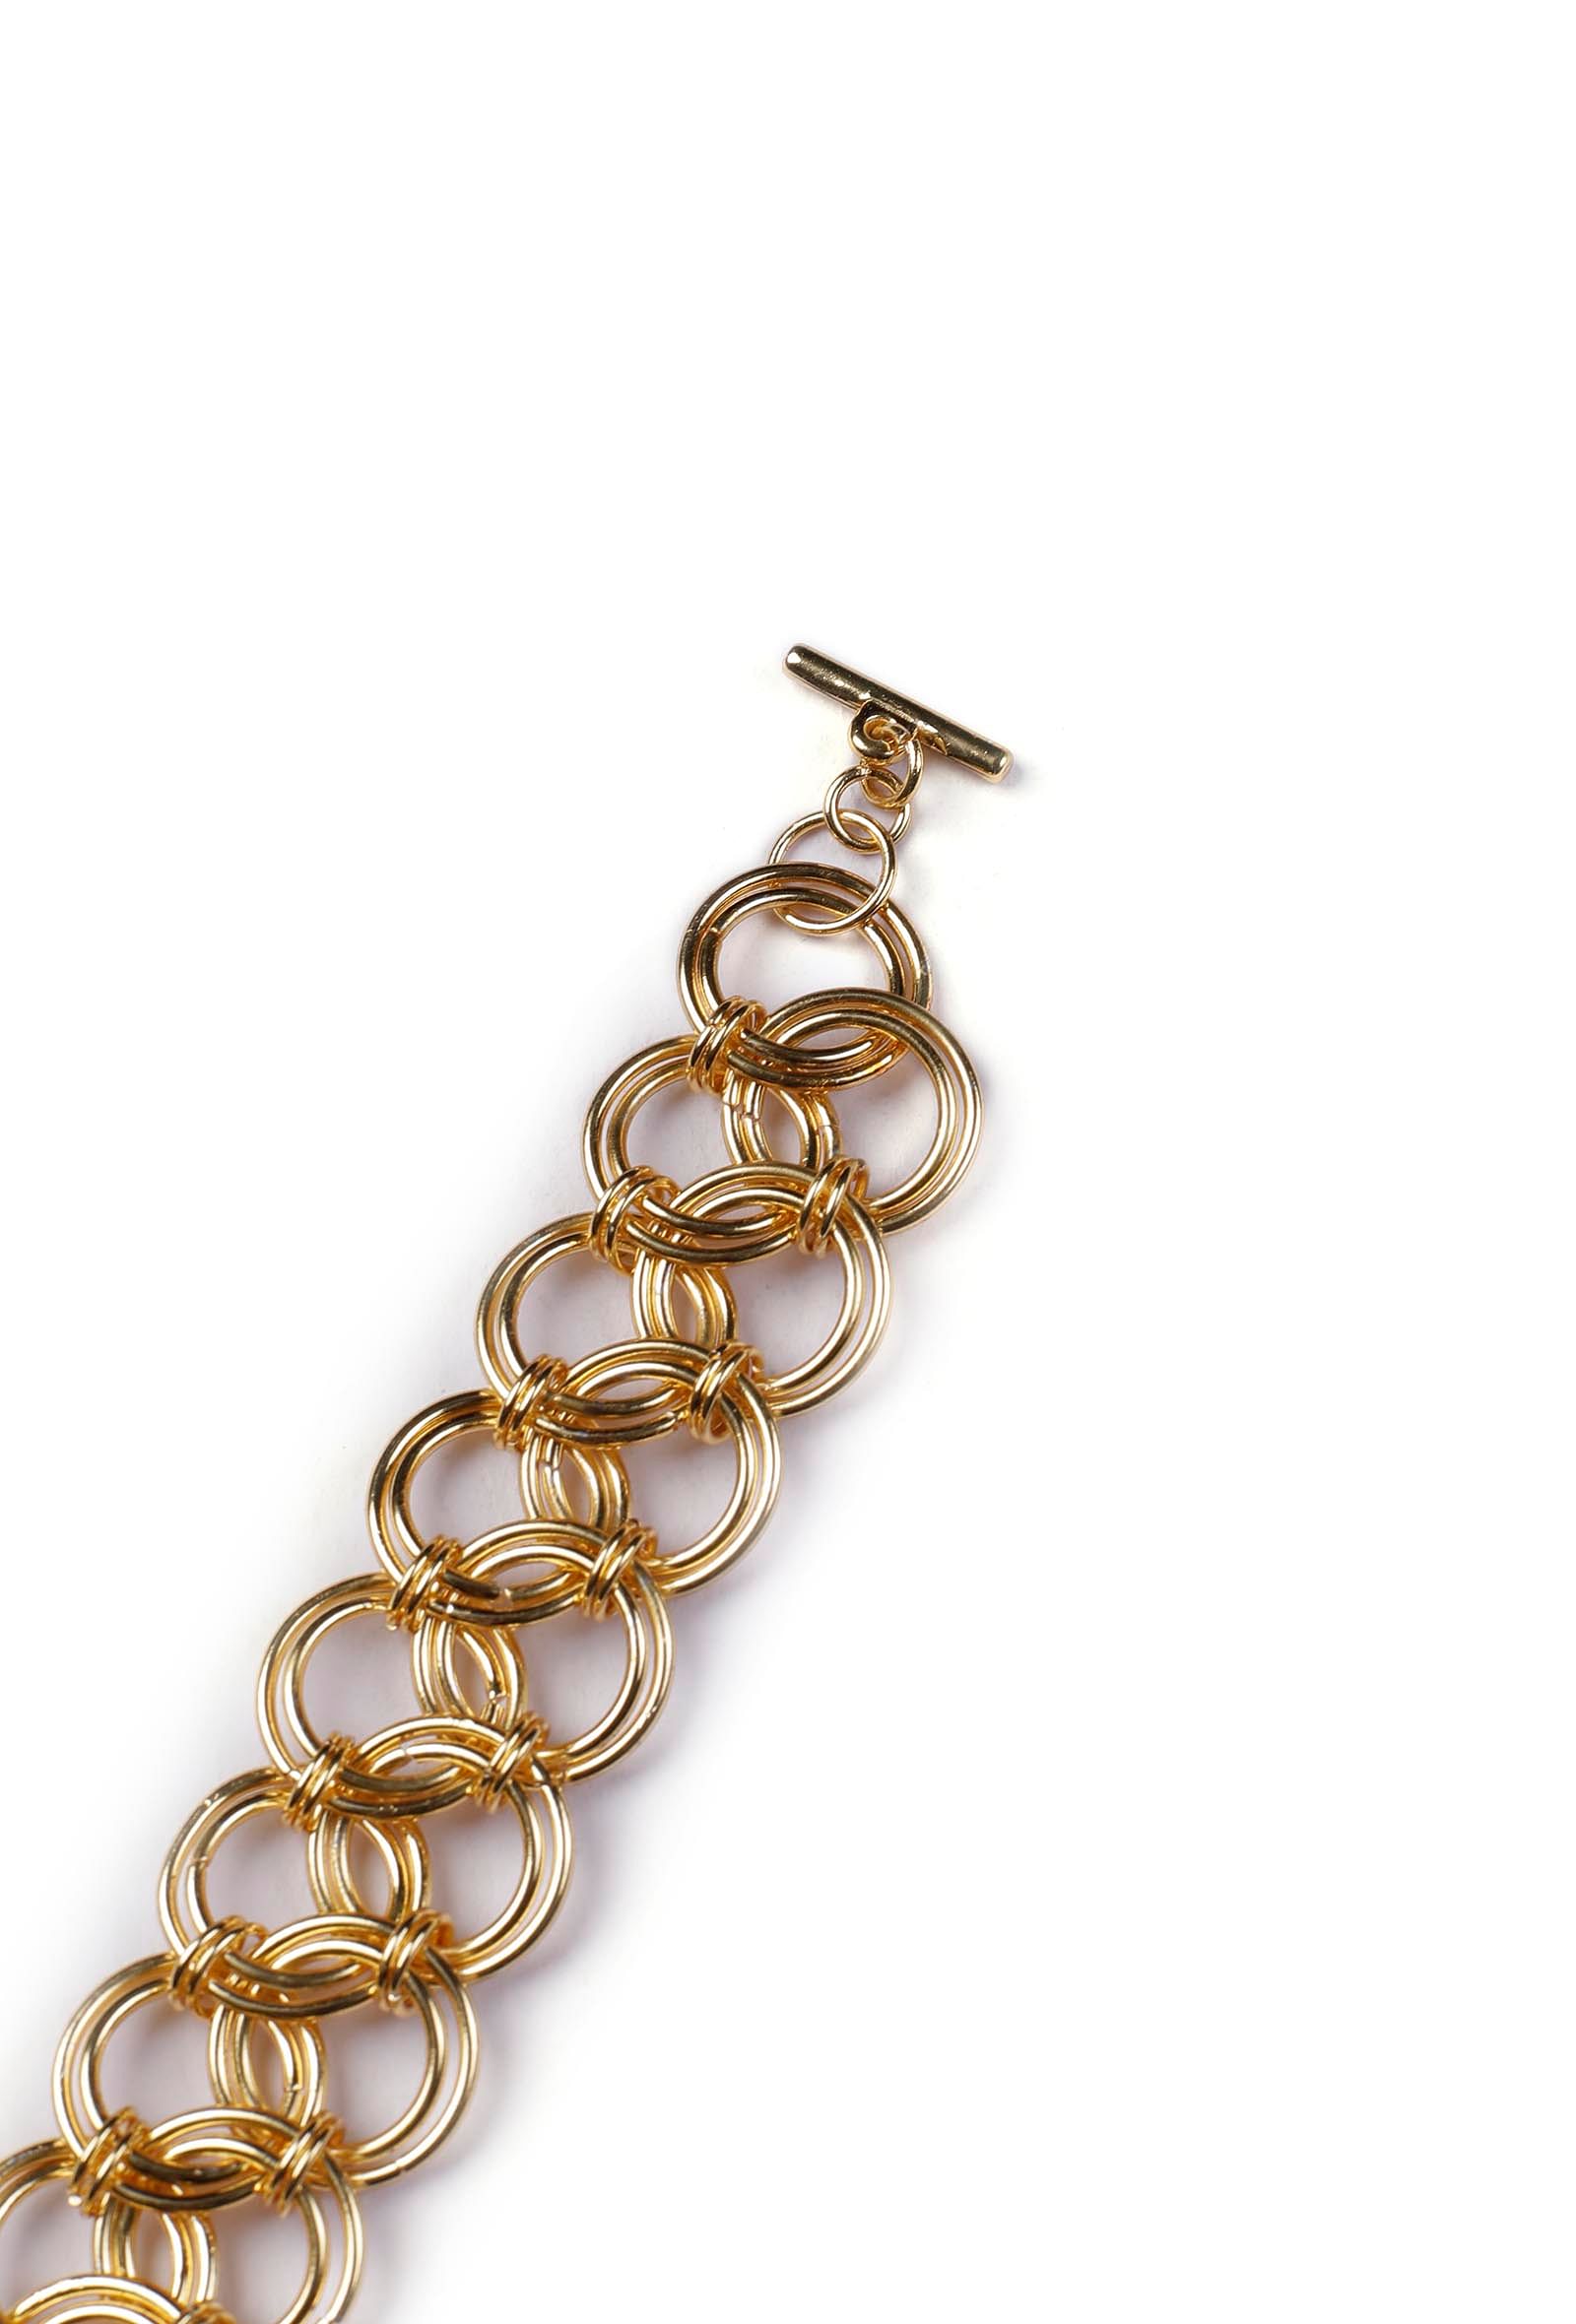 Buy Copper Chain Bracelet or Anklet.handmade Copper Chain.big Link Bracelet.pure  99.9% Copper Link Bracelet. Arthritis Helper. Made With Love. Online in  India - Etsy